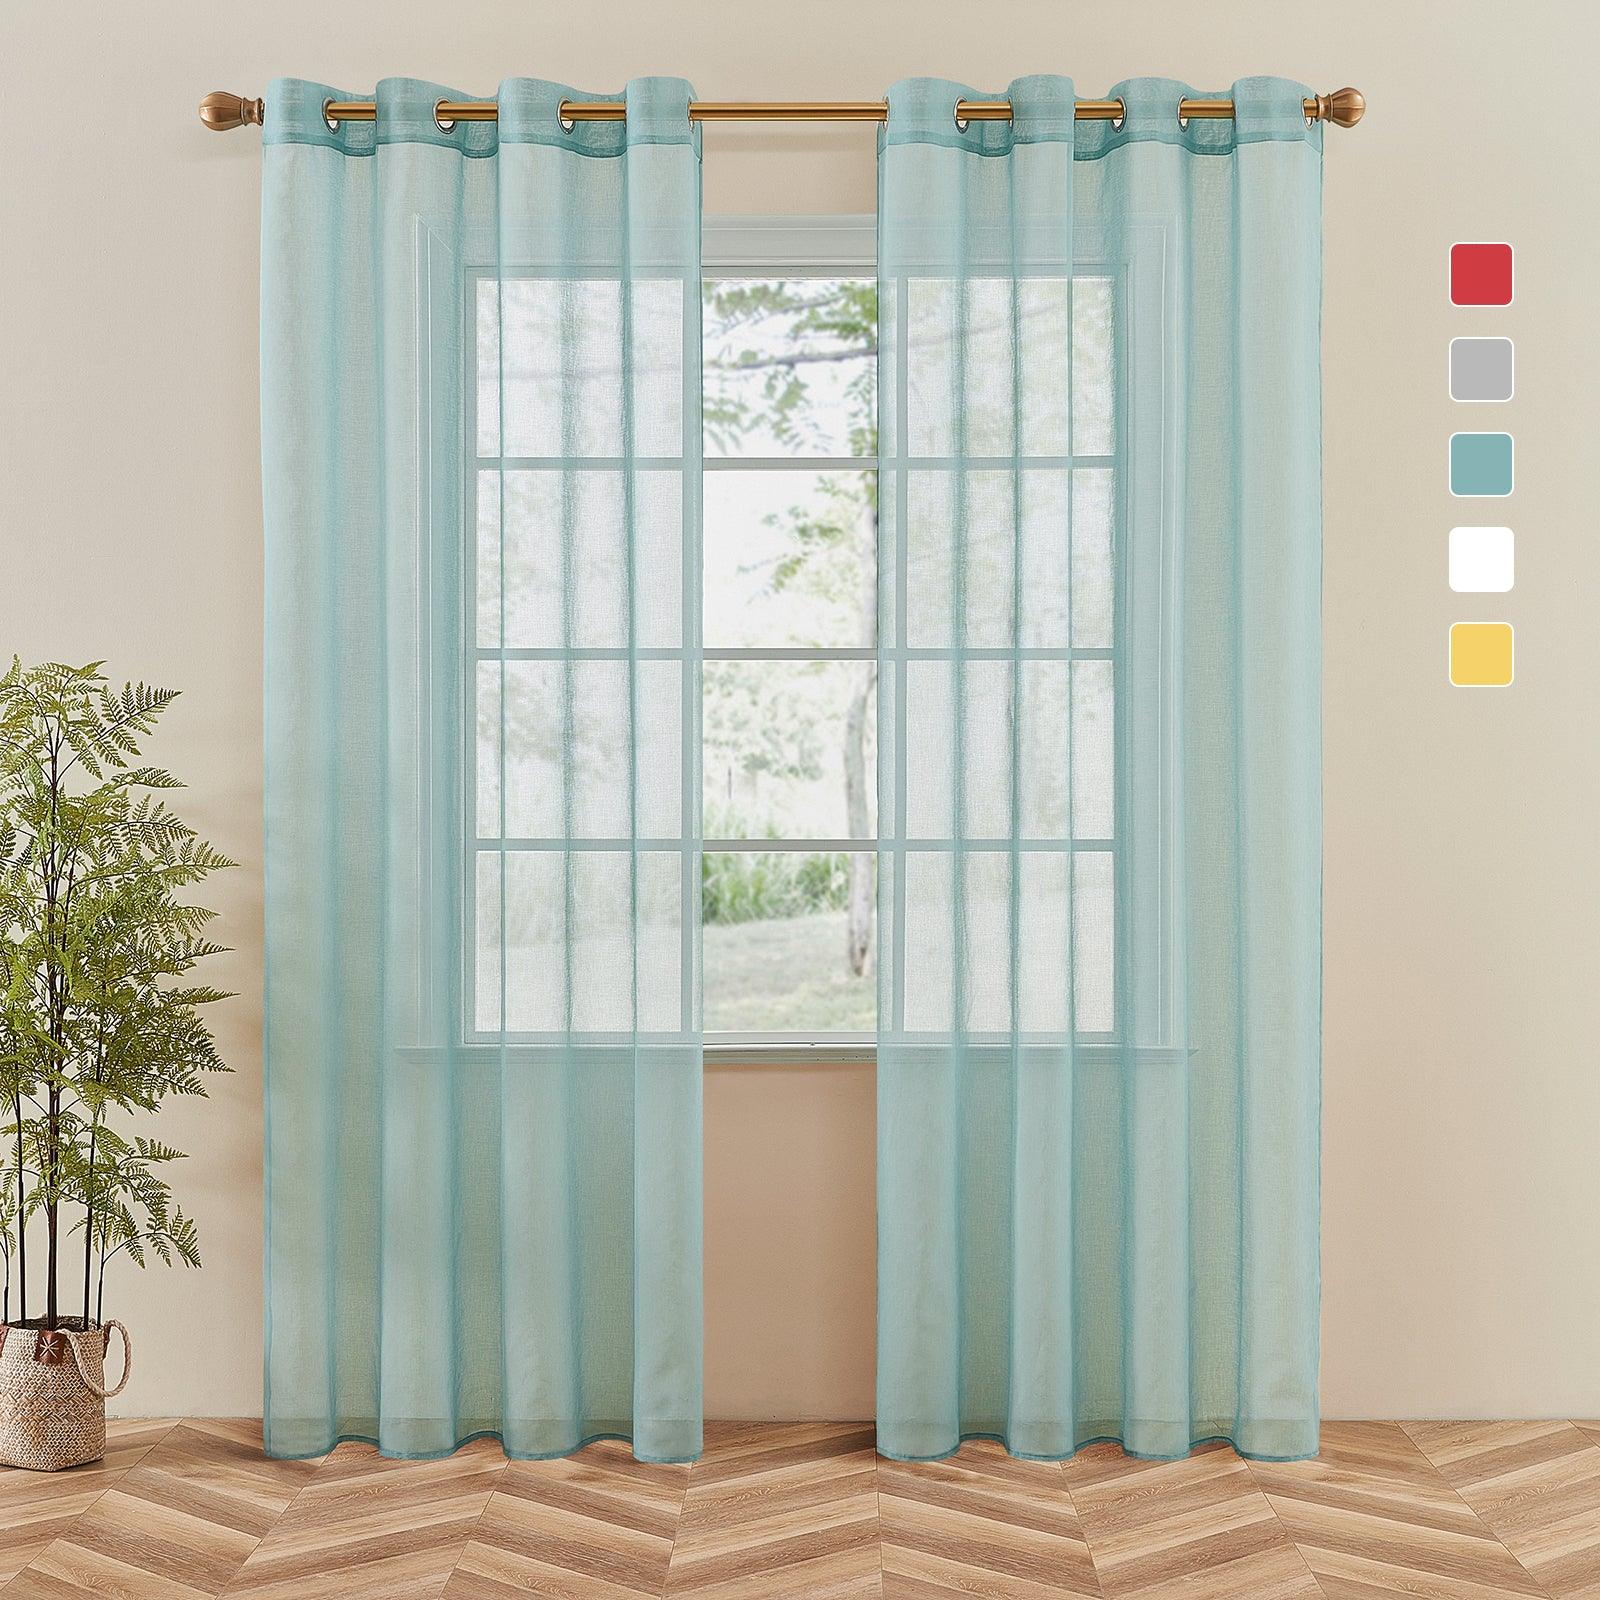 Customized Size - Chiffon White Sheer Nursery Curtain For Kitchen,1 Panel - Topfinel